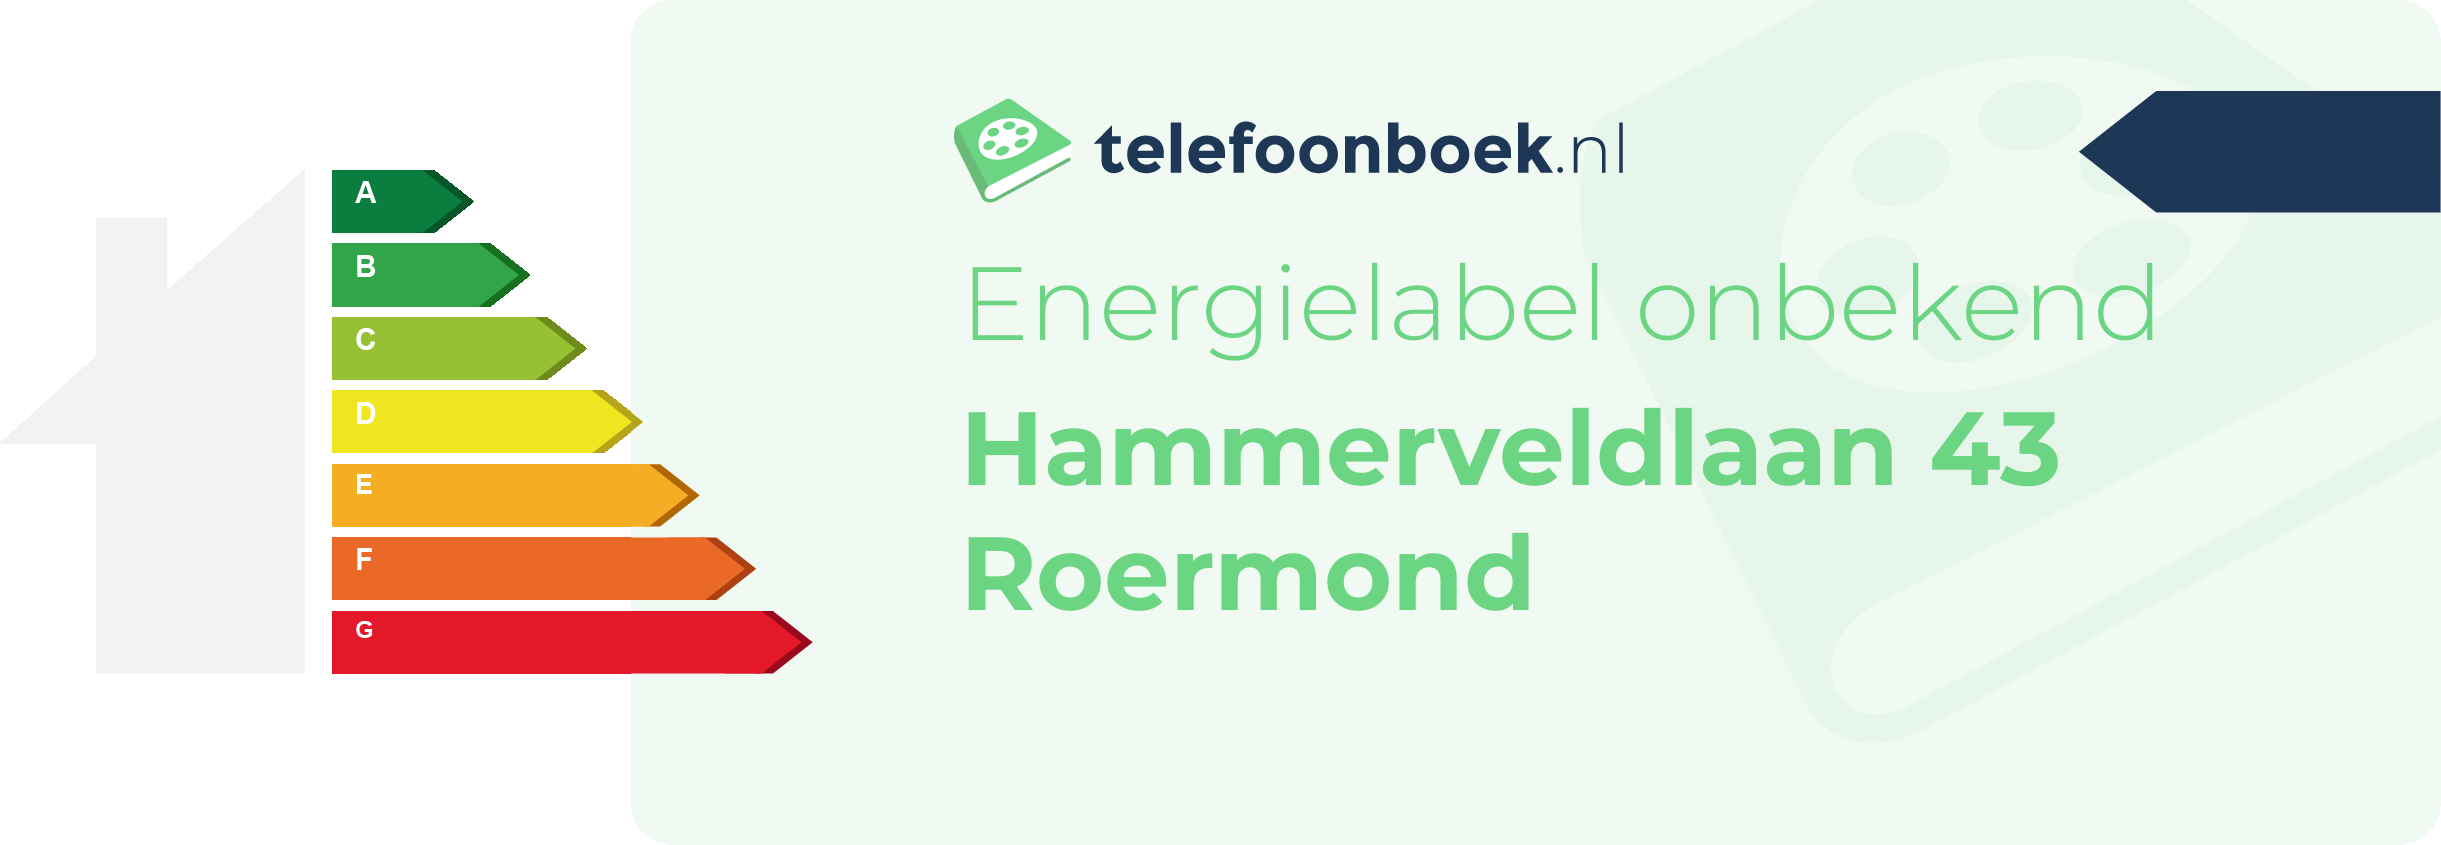 Energielabel Hammerveldlaan 43 Roermond